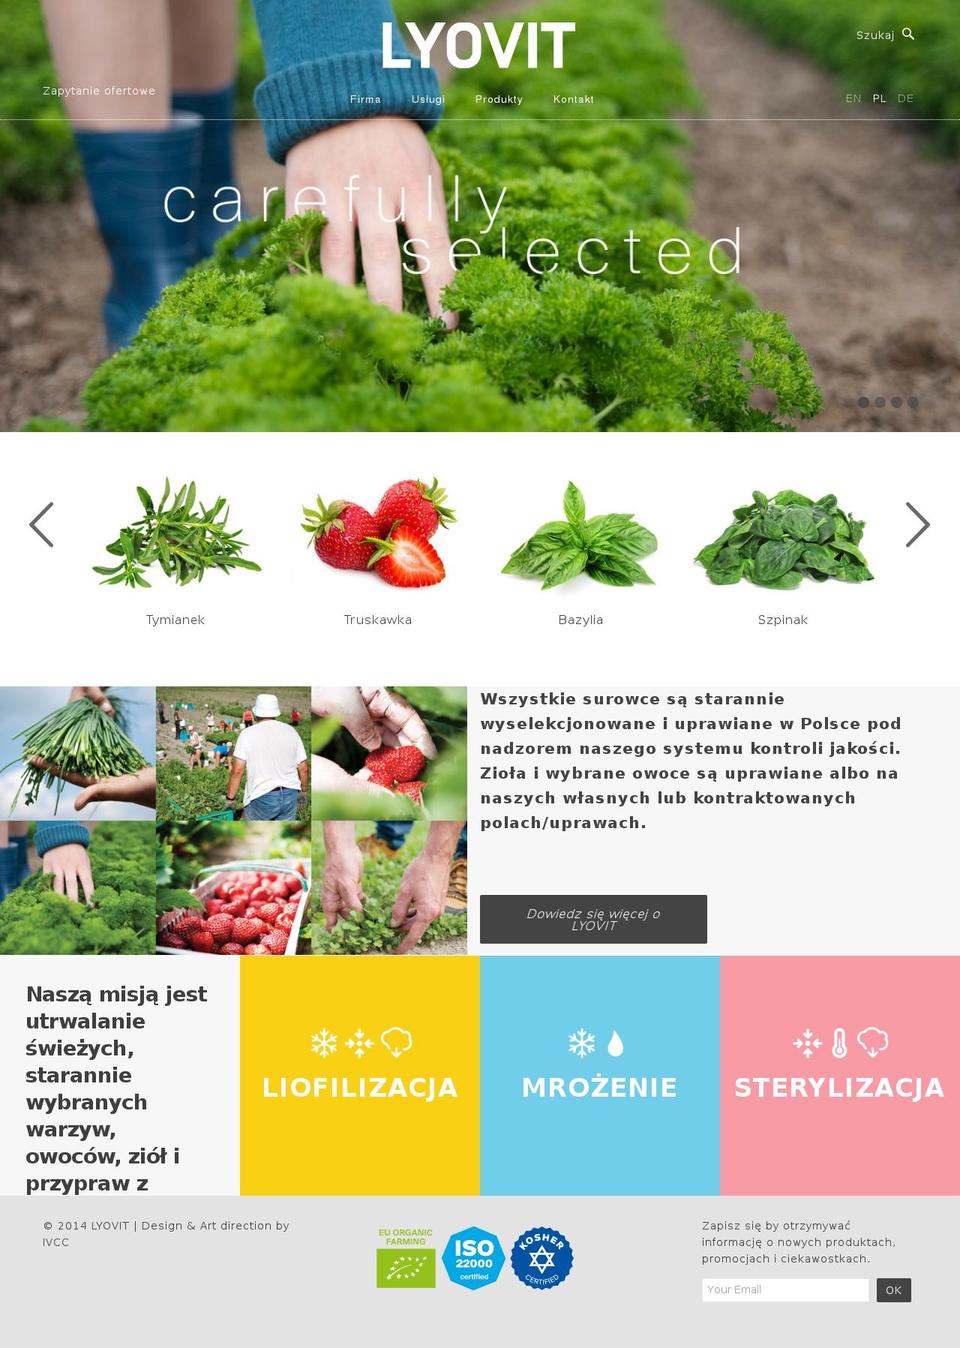 organicfood.pl shopify website screenshot